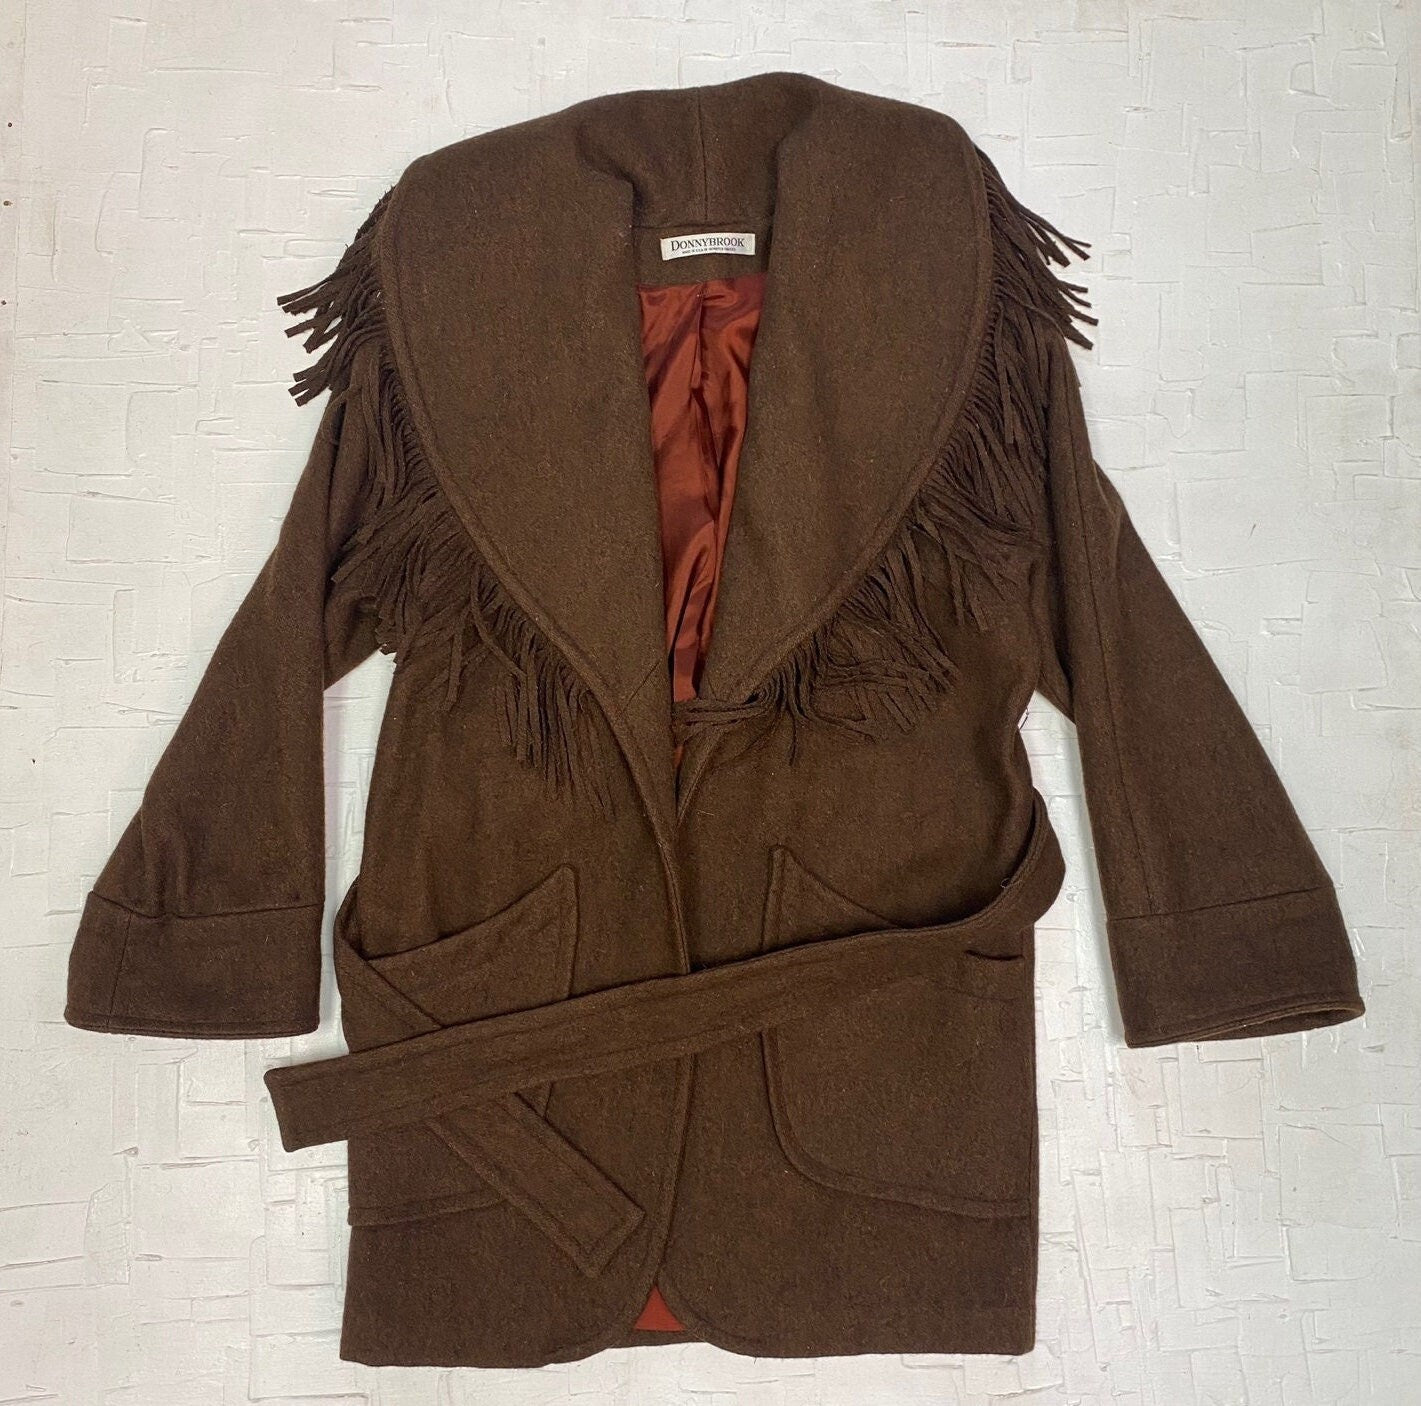 Vintage DonnyBrook Tasseled Wool Coat with Belt | Vintage Coat | Tassels | Western Wear | Vintage Women's Coat | Size S | SKU: M-1822